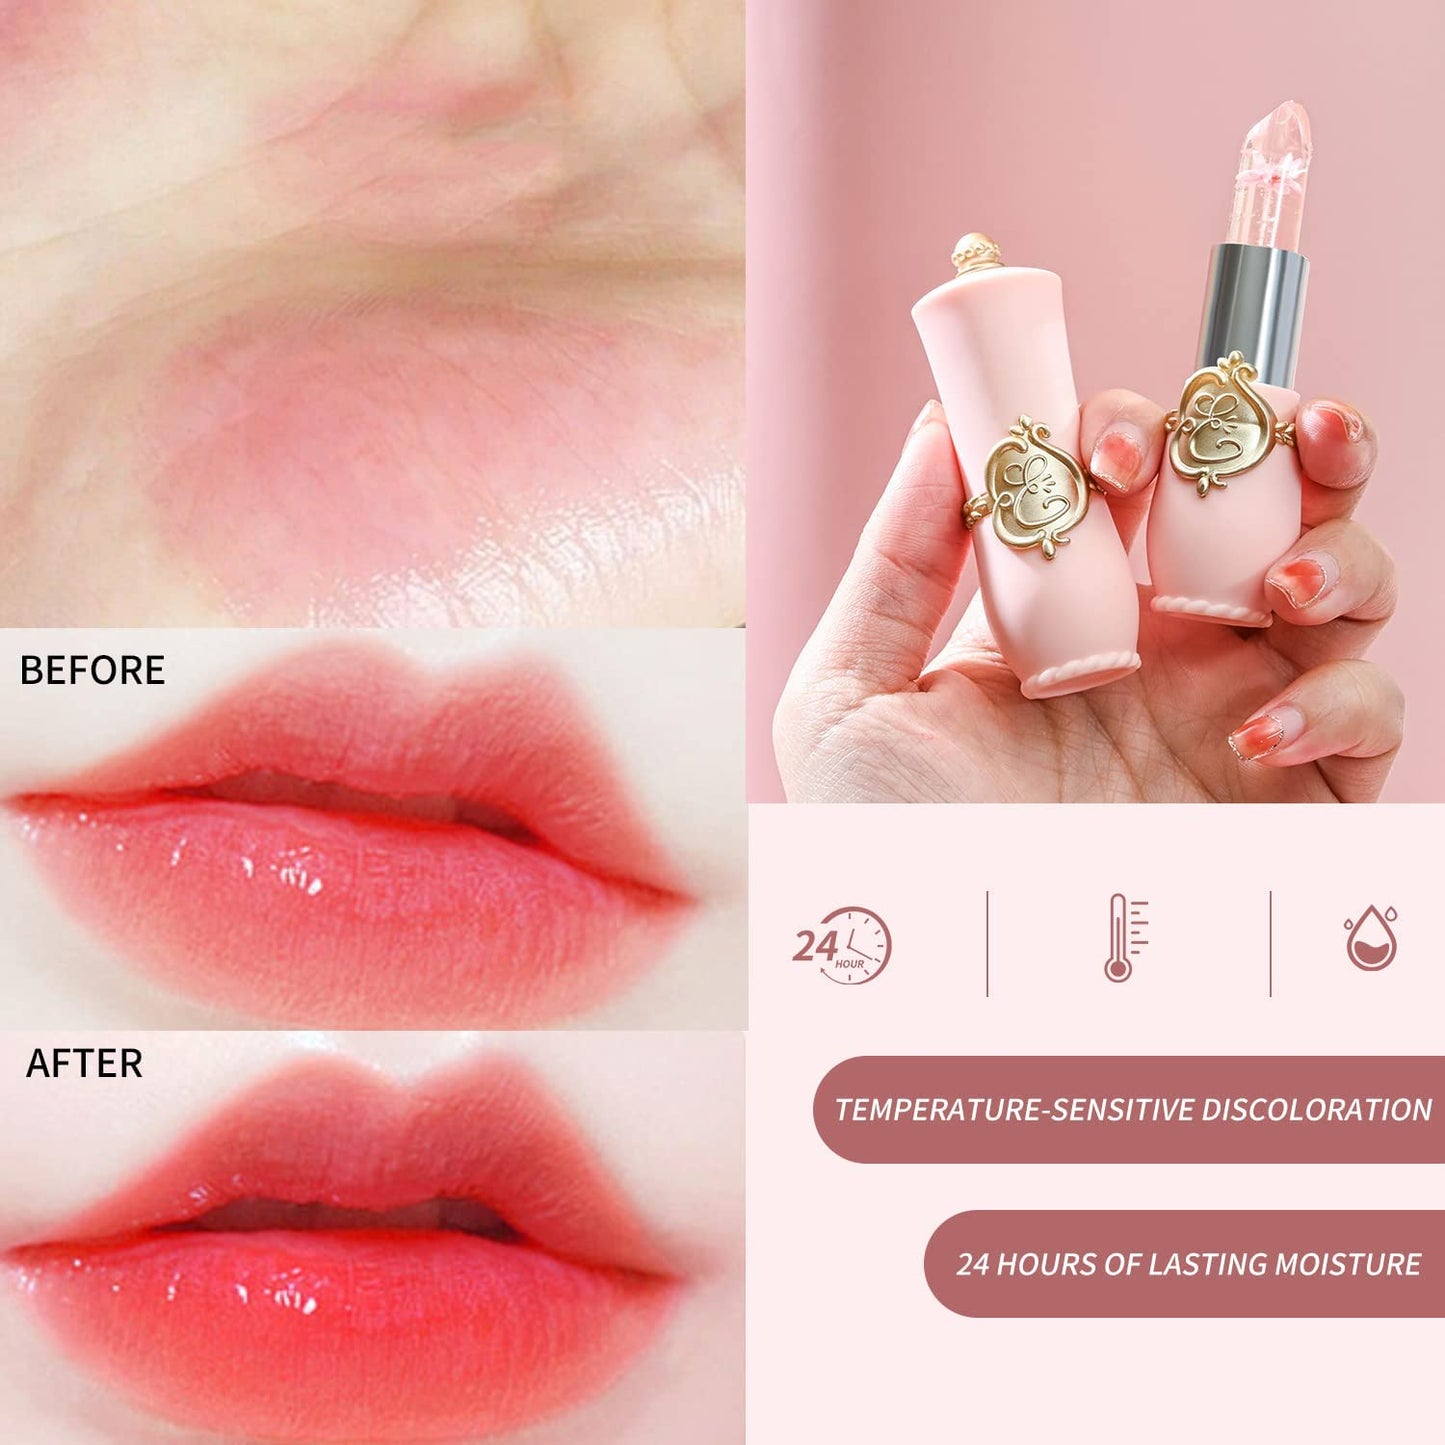 6 Packs Flower Jelly Lipstick Set Magic Temperature Color Change Lip Balm